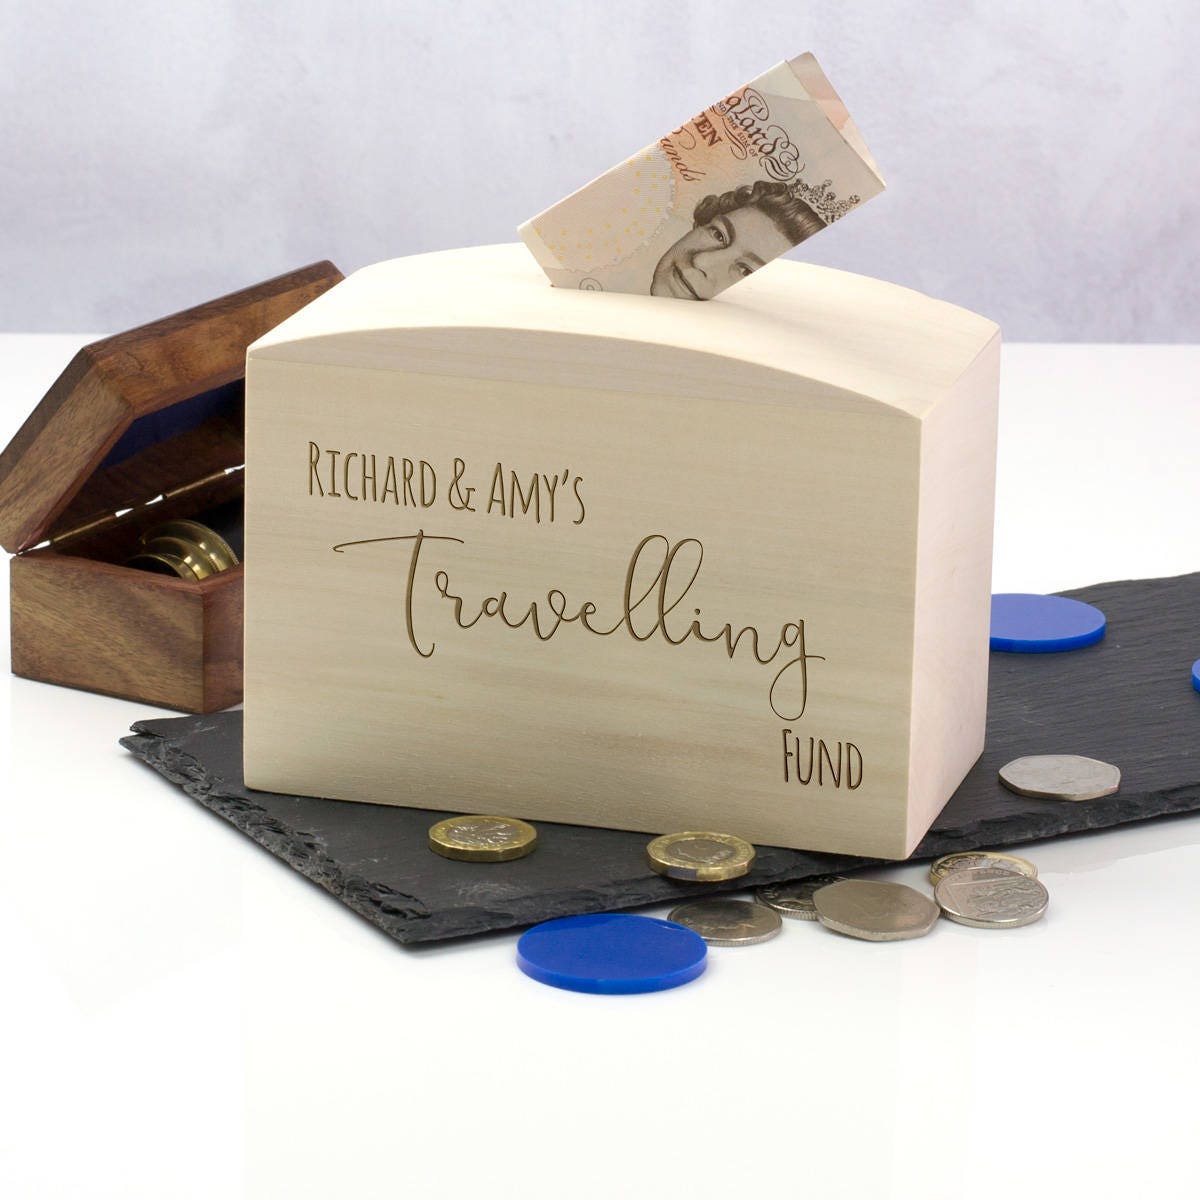 travel fund money box big w